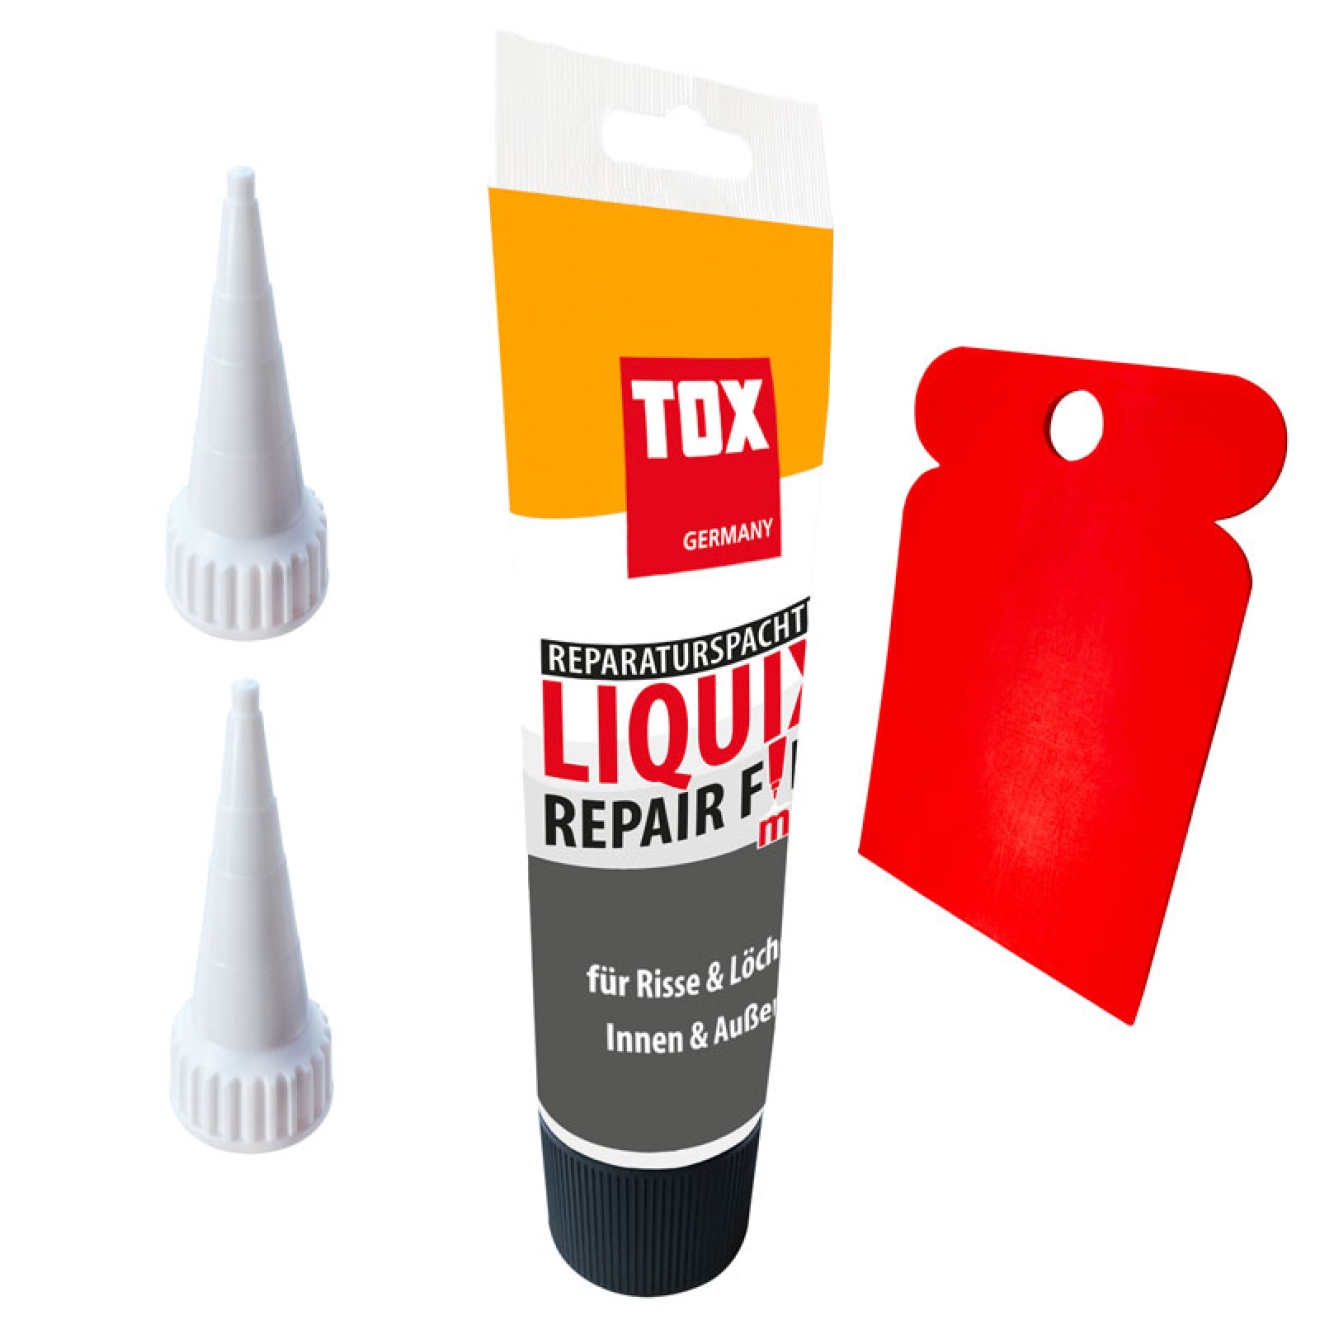 TOX Reparaturspachtel Liquix Repair-Fill